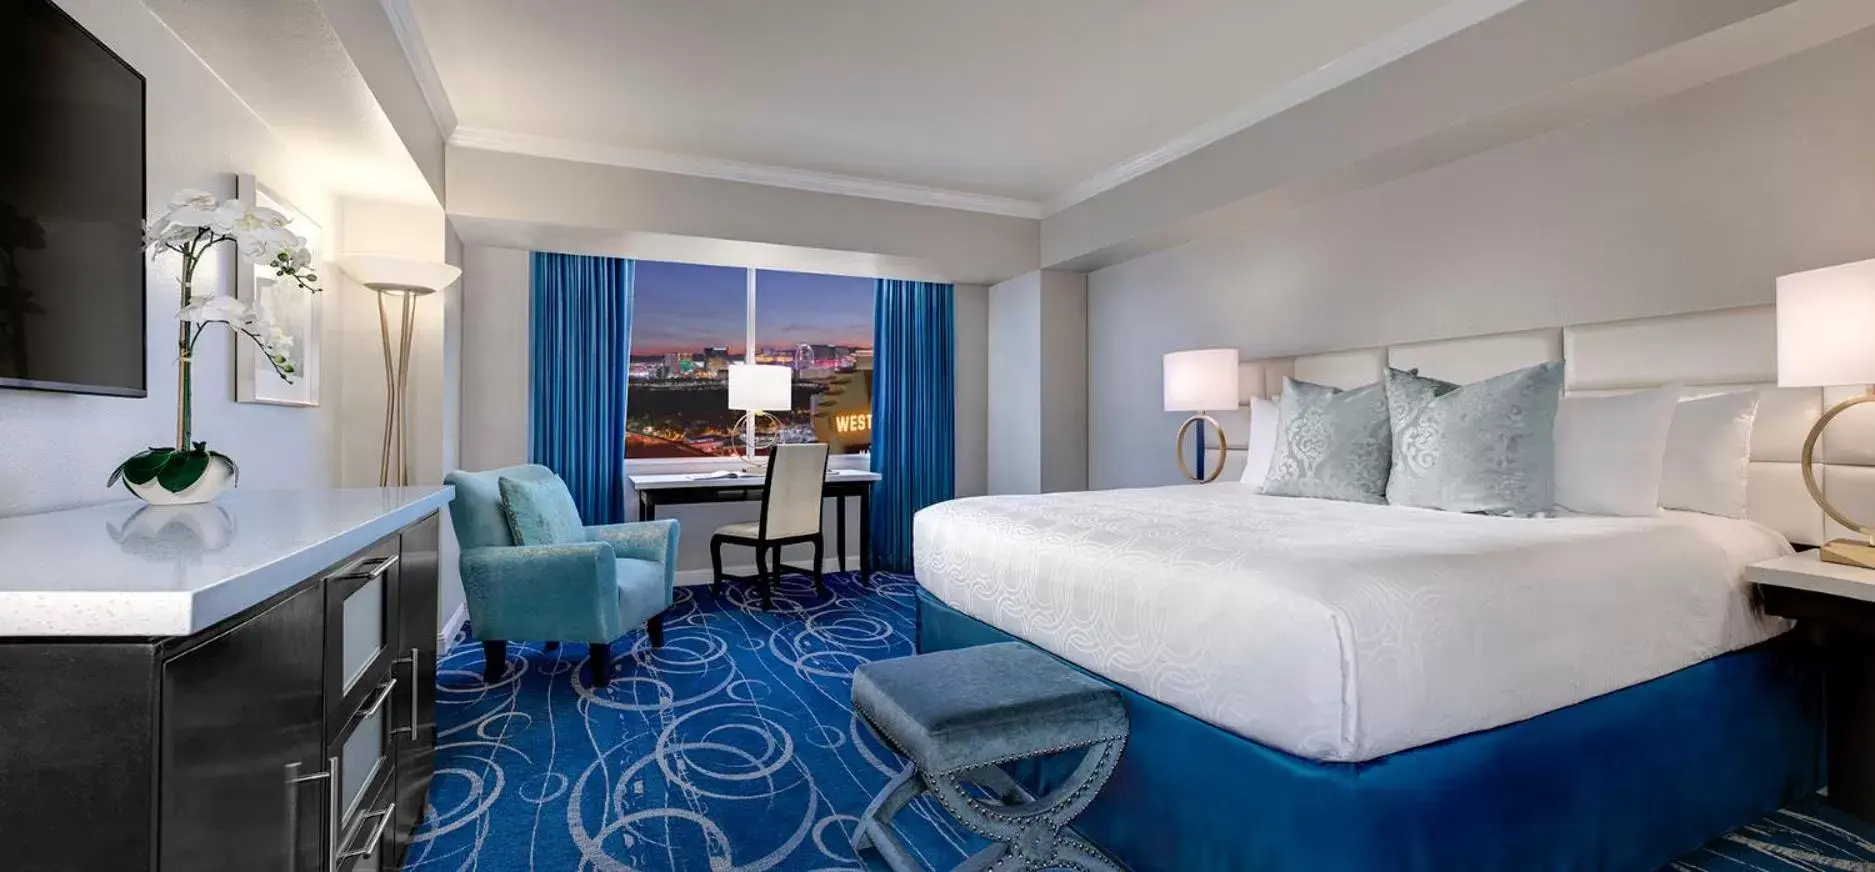 King Room in Westgate Las Vegas Resort and Casino